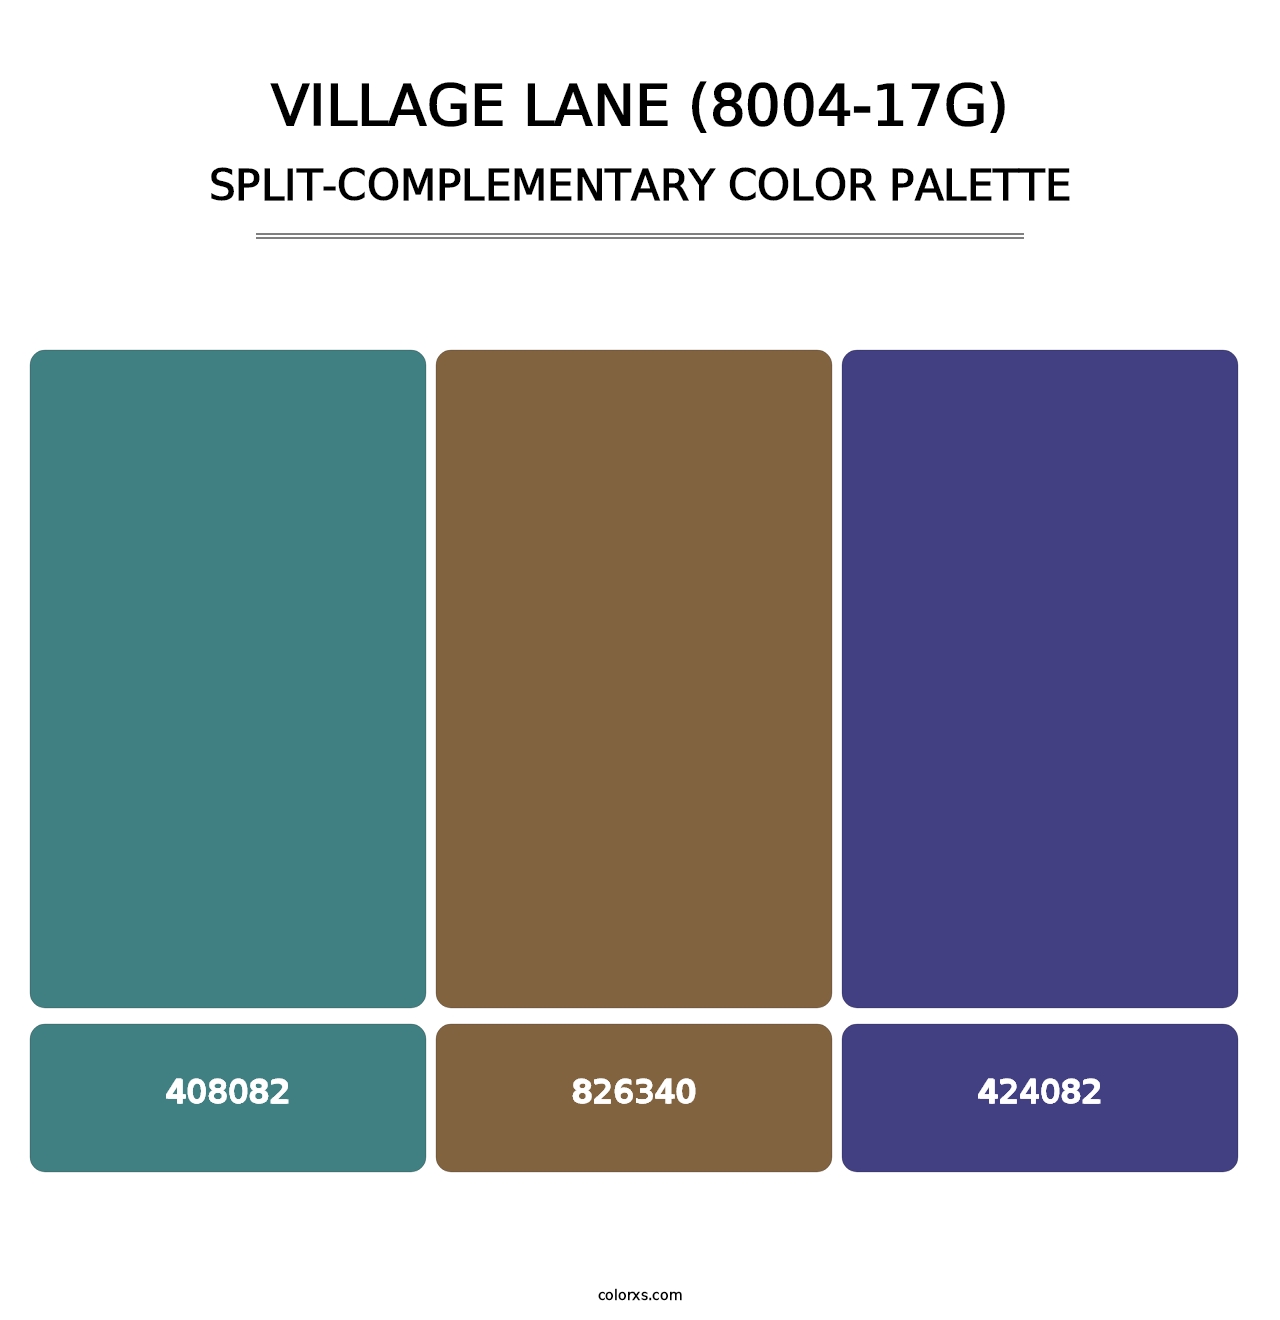 Village Lane (8004-17G) - Split-Complementary Color Palette